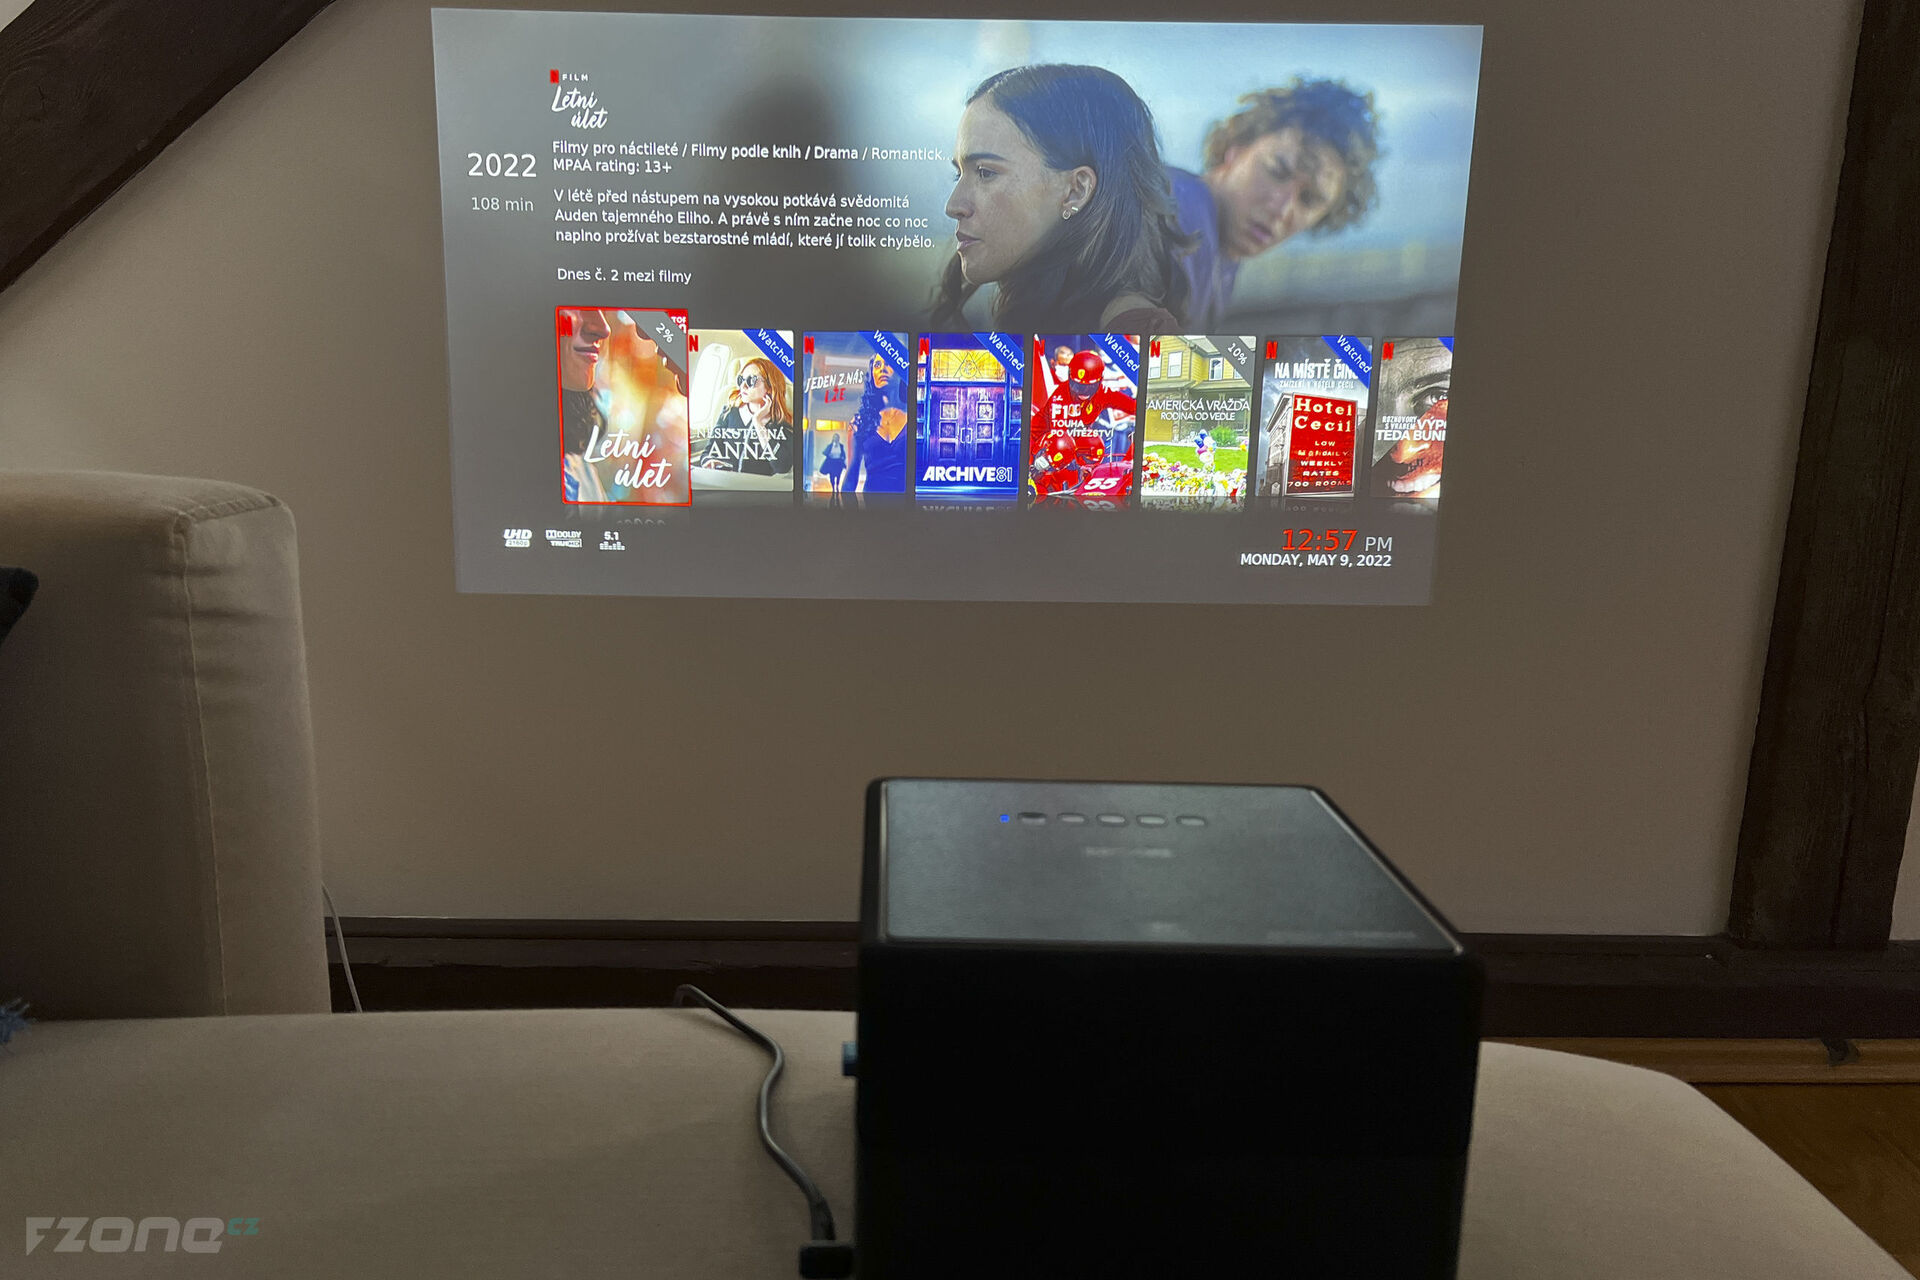 Netflix + projektor